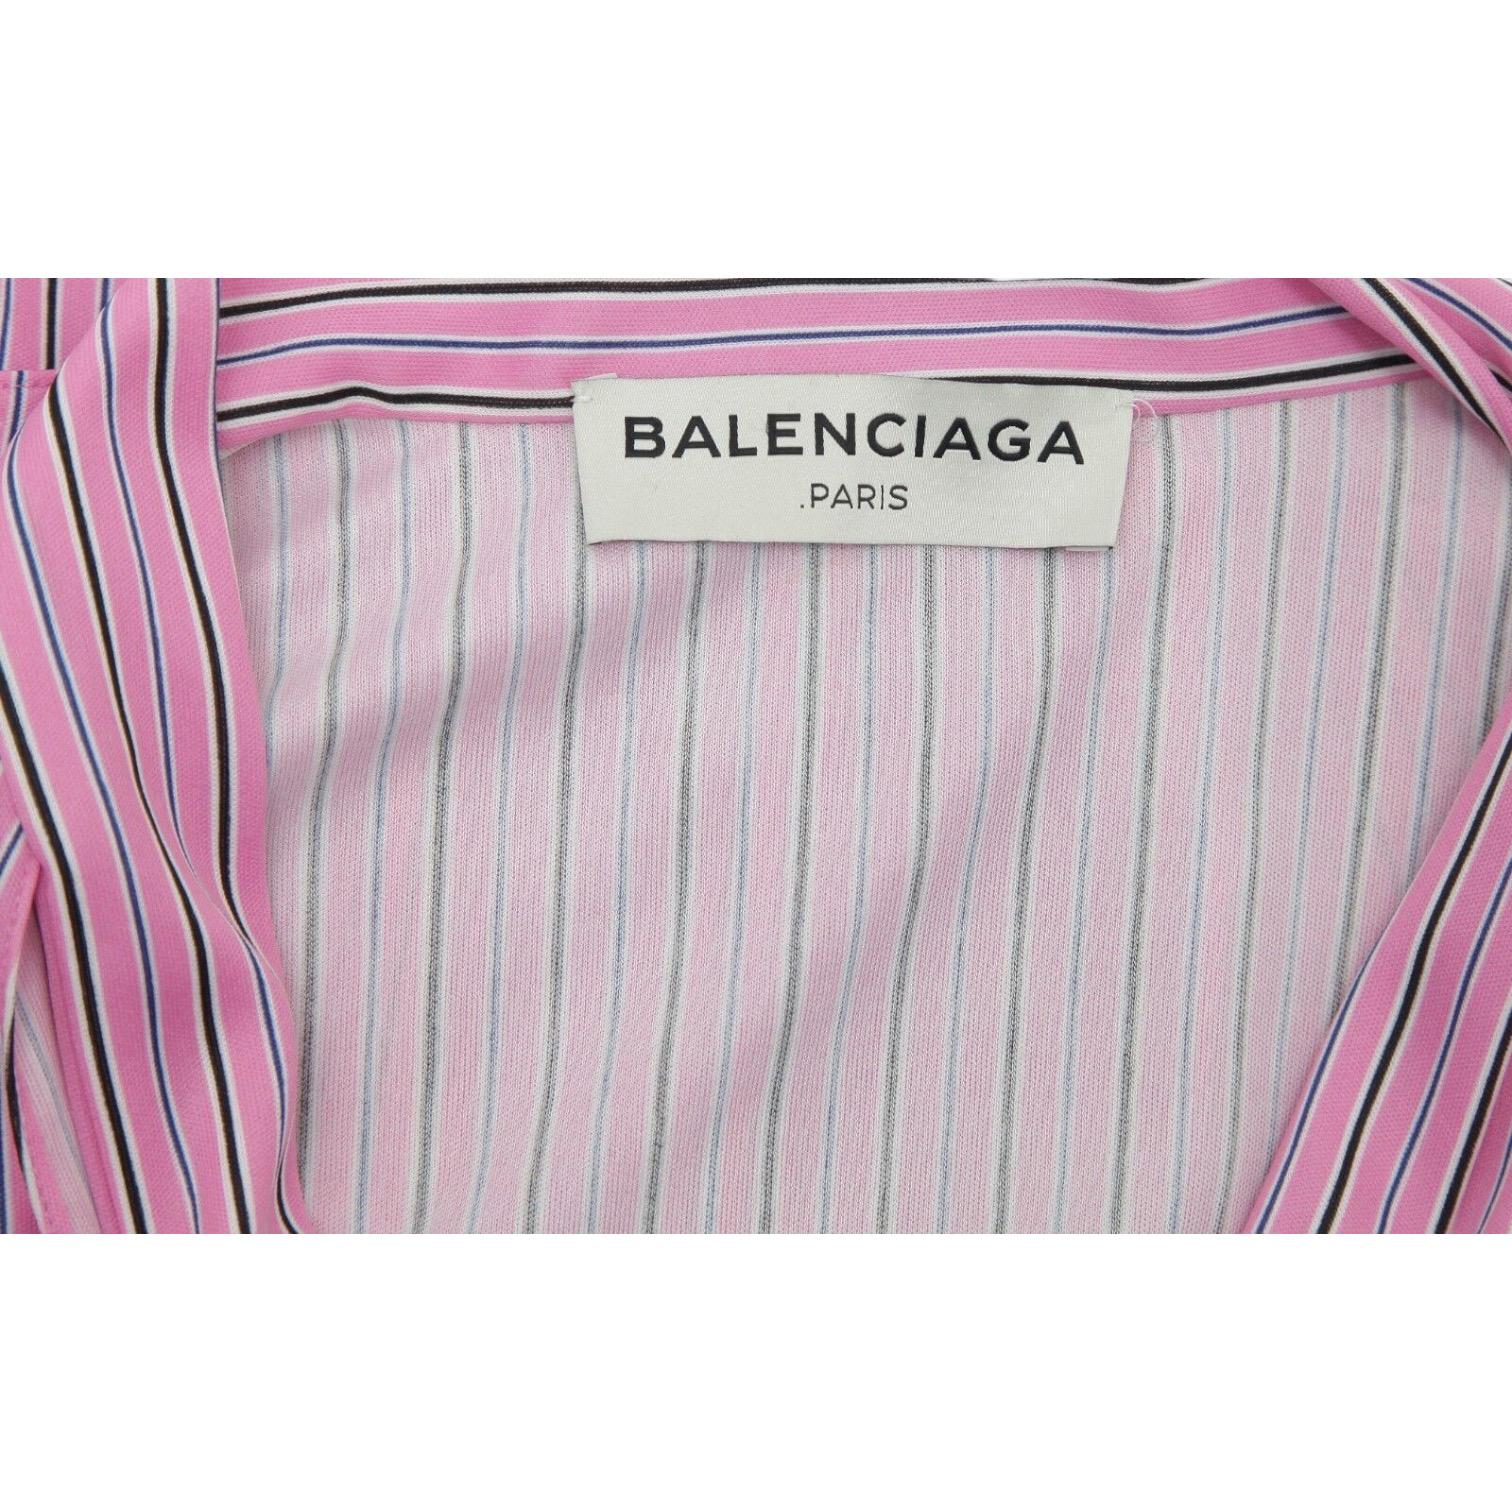 BALENCIAGA Striped Top Shirt Blouse 3/4 Sleeve Neck Tie Rose White Black 38 NWT For Sale 6